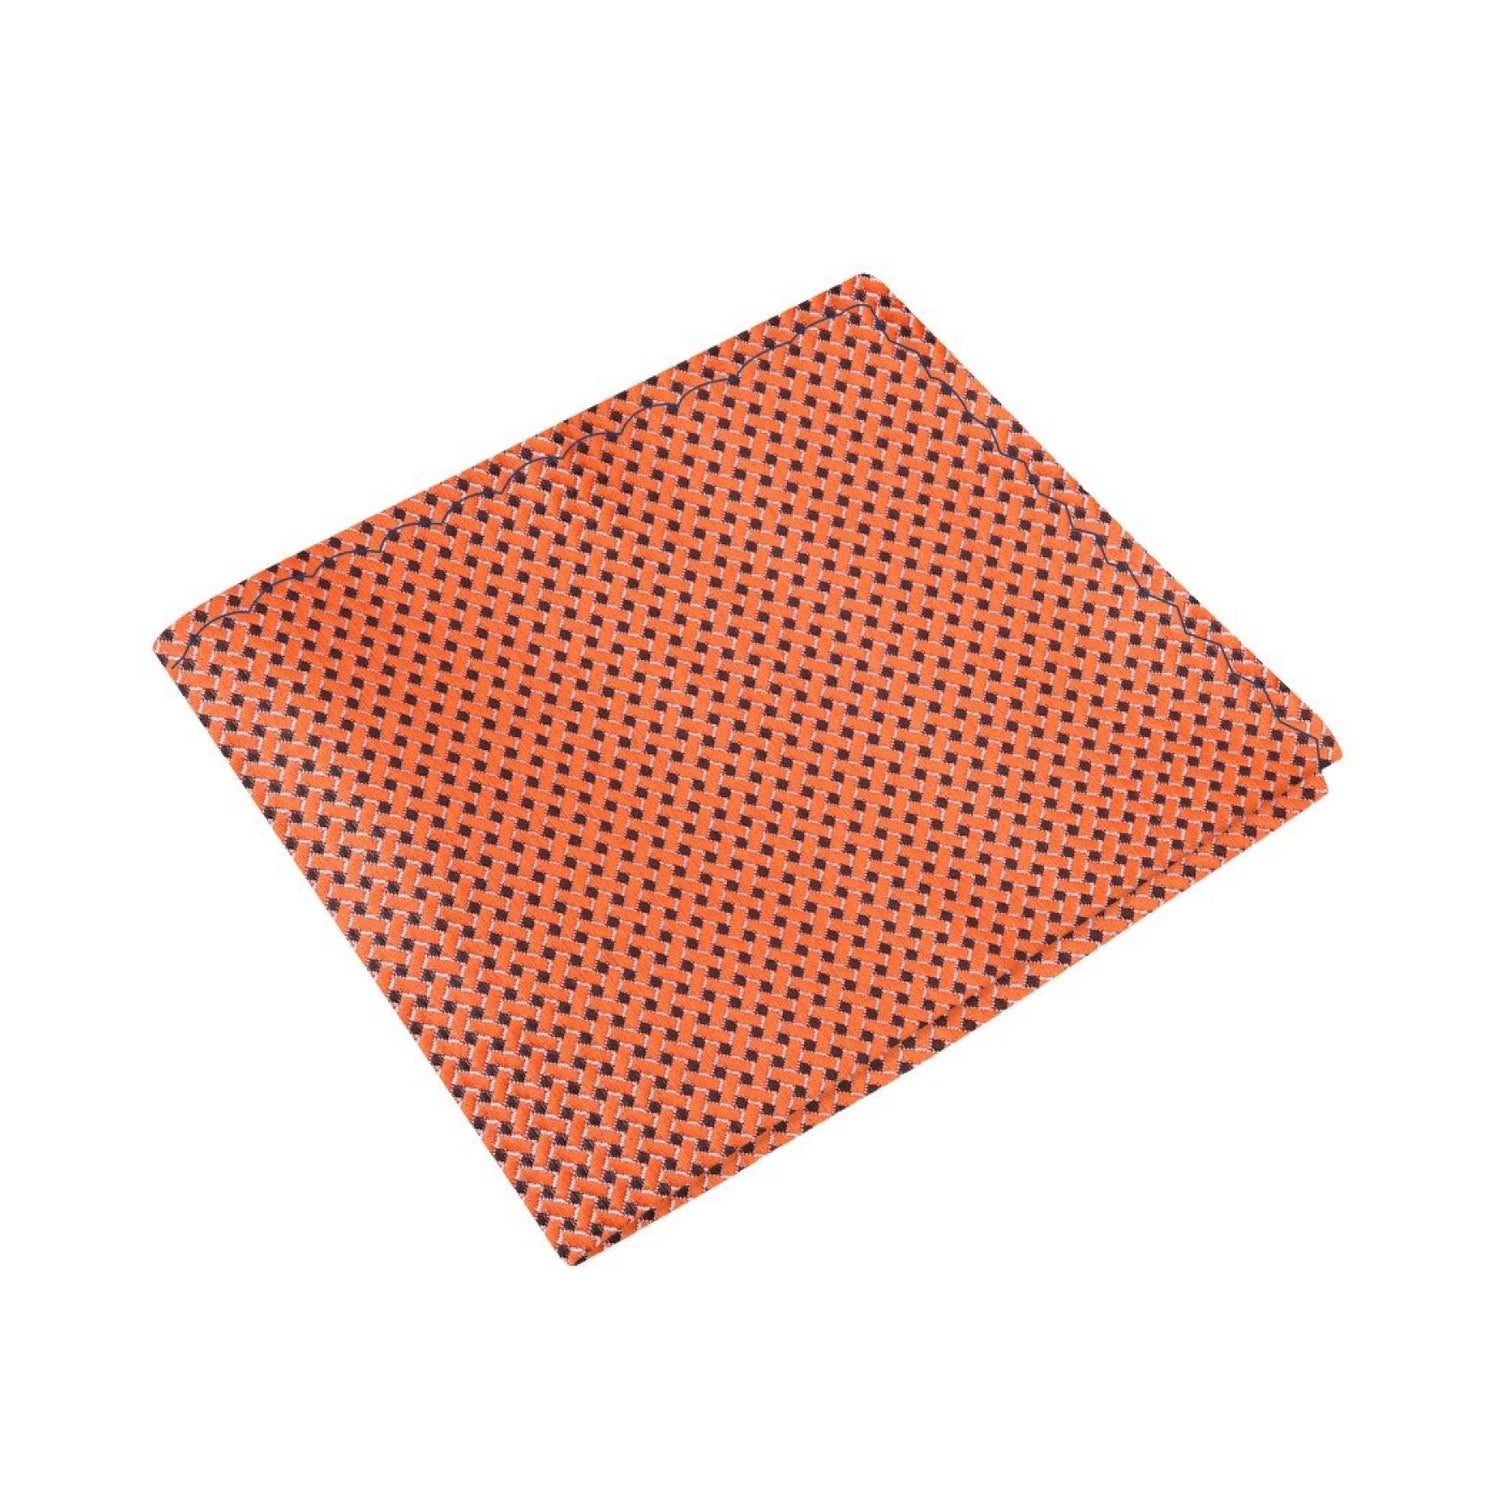 Main View: Orange, Black Geometric Pocket Square